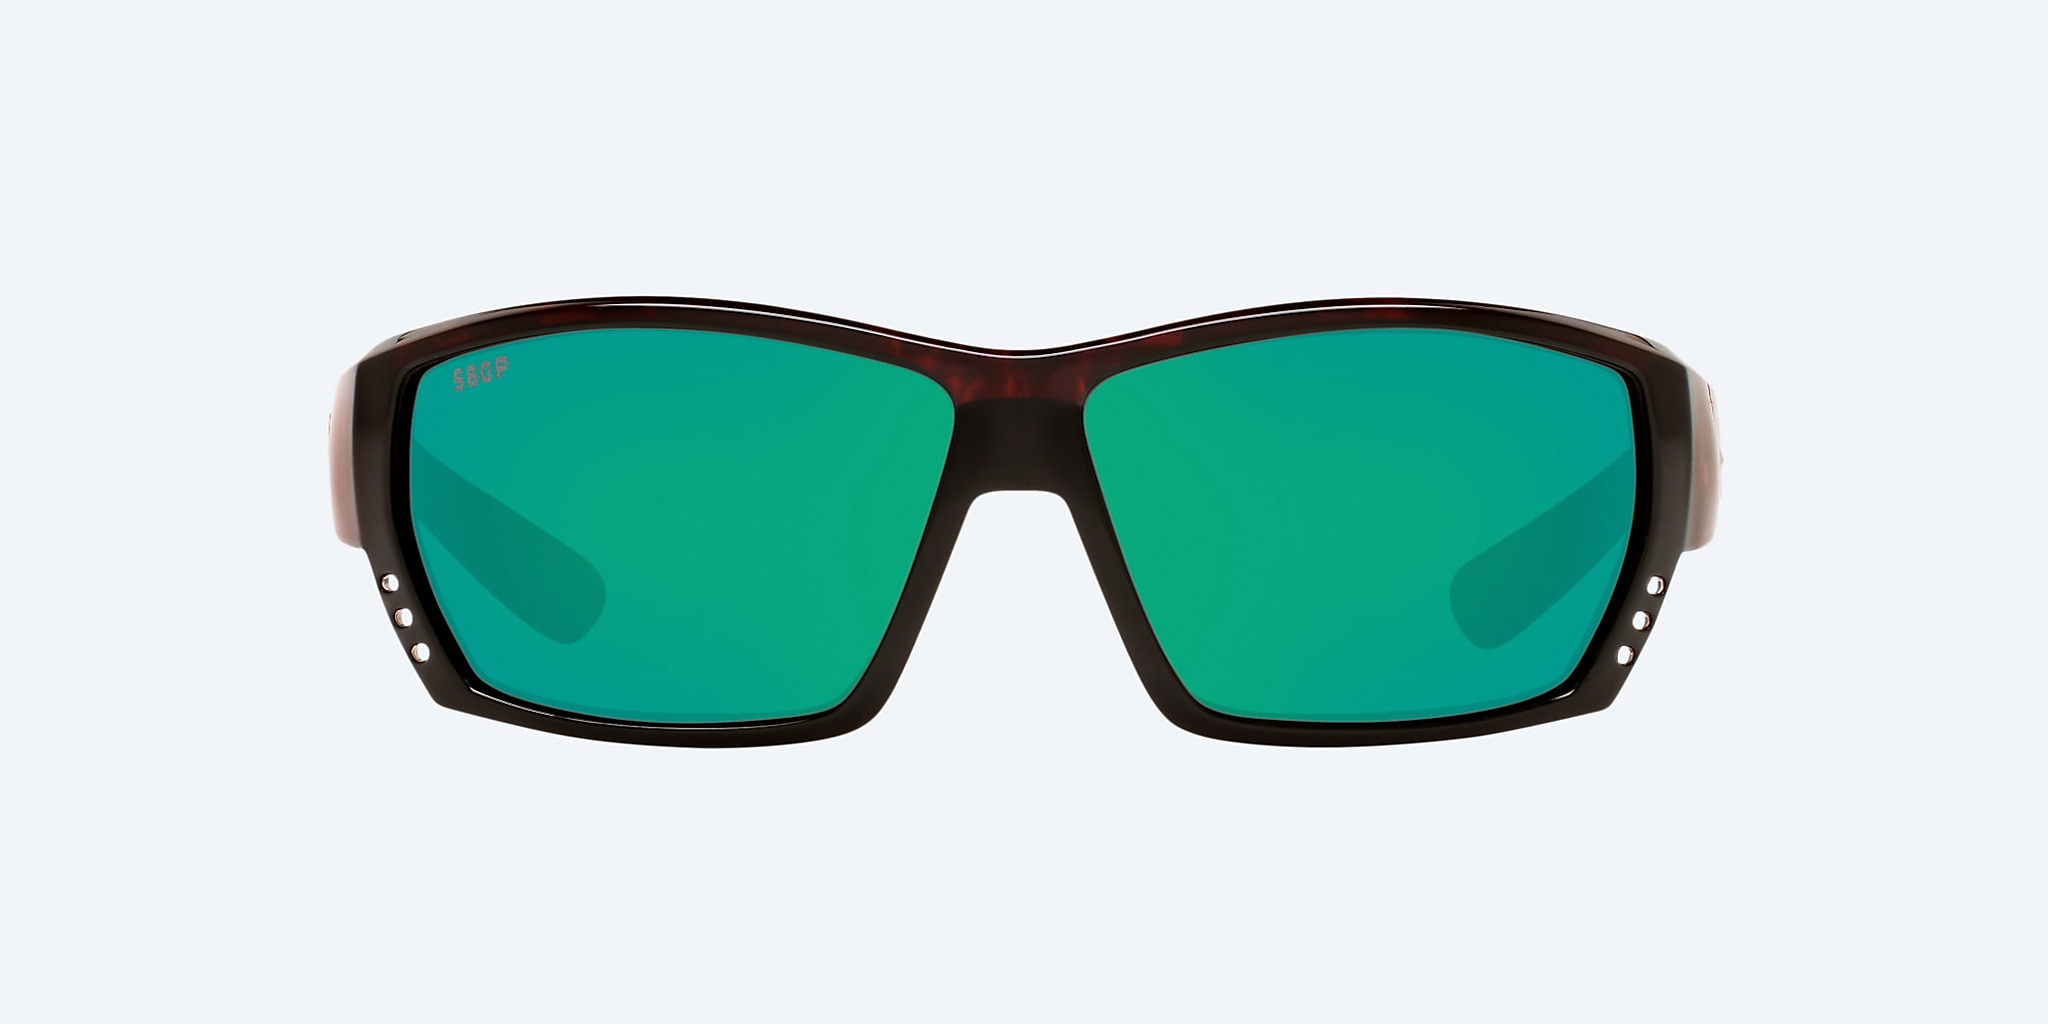 Accessories on point 🥰 Indio Sunglasses & Saffron Medium Bag by